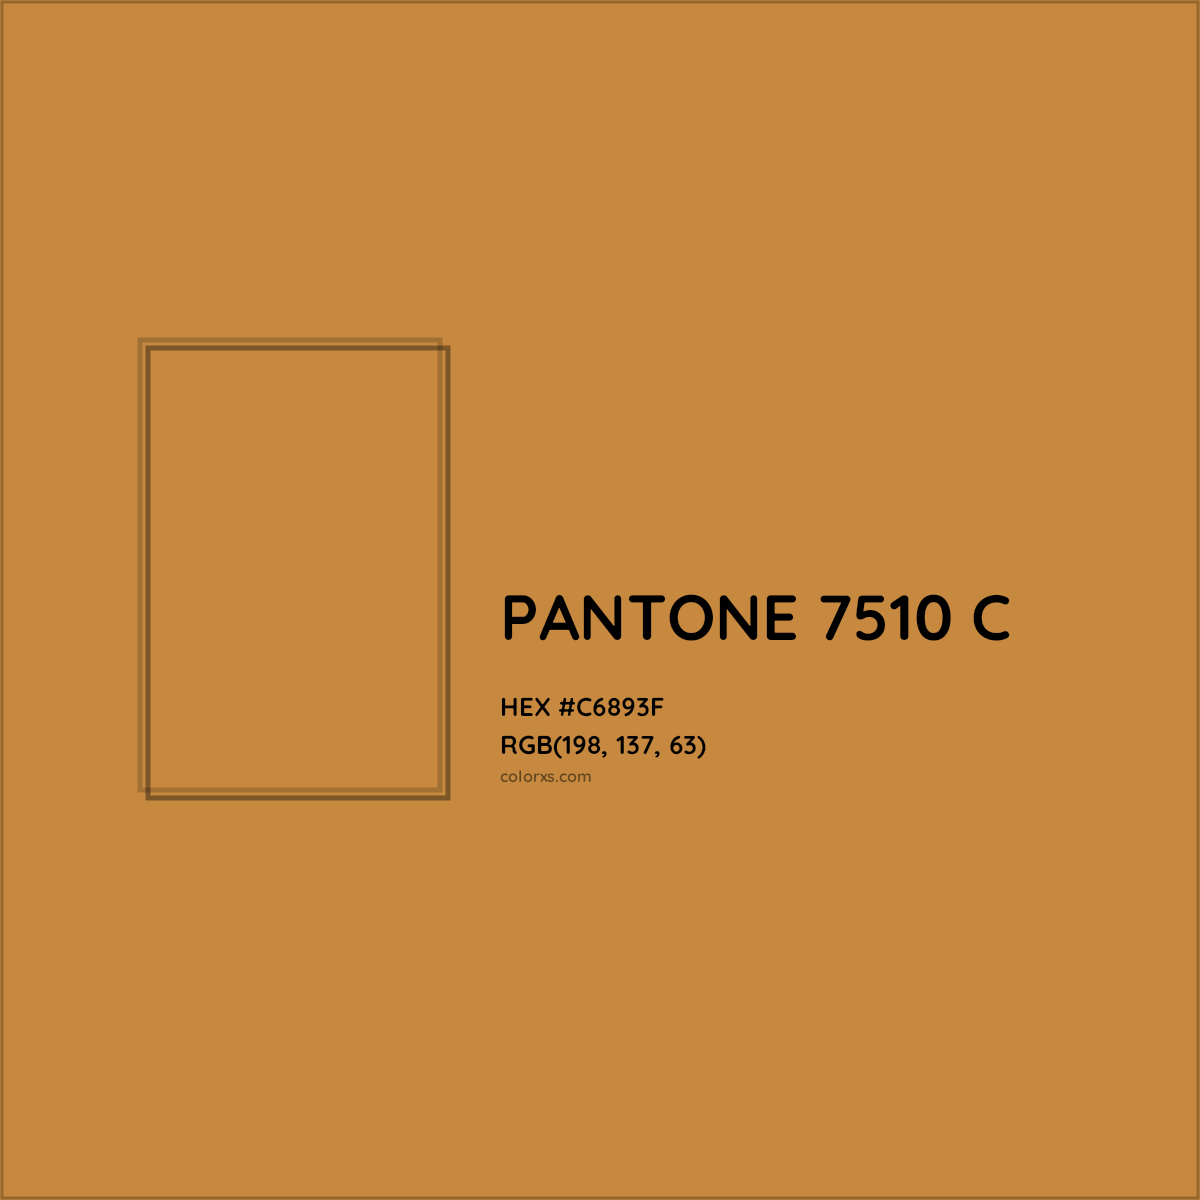 HEX #C6893F PANTONE 7510 C CMS Pantone PMS - Color Code